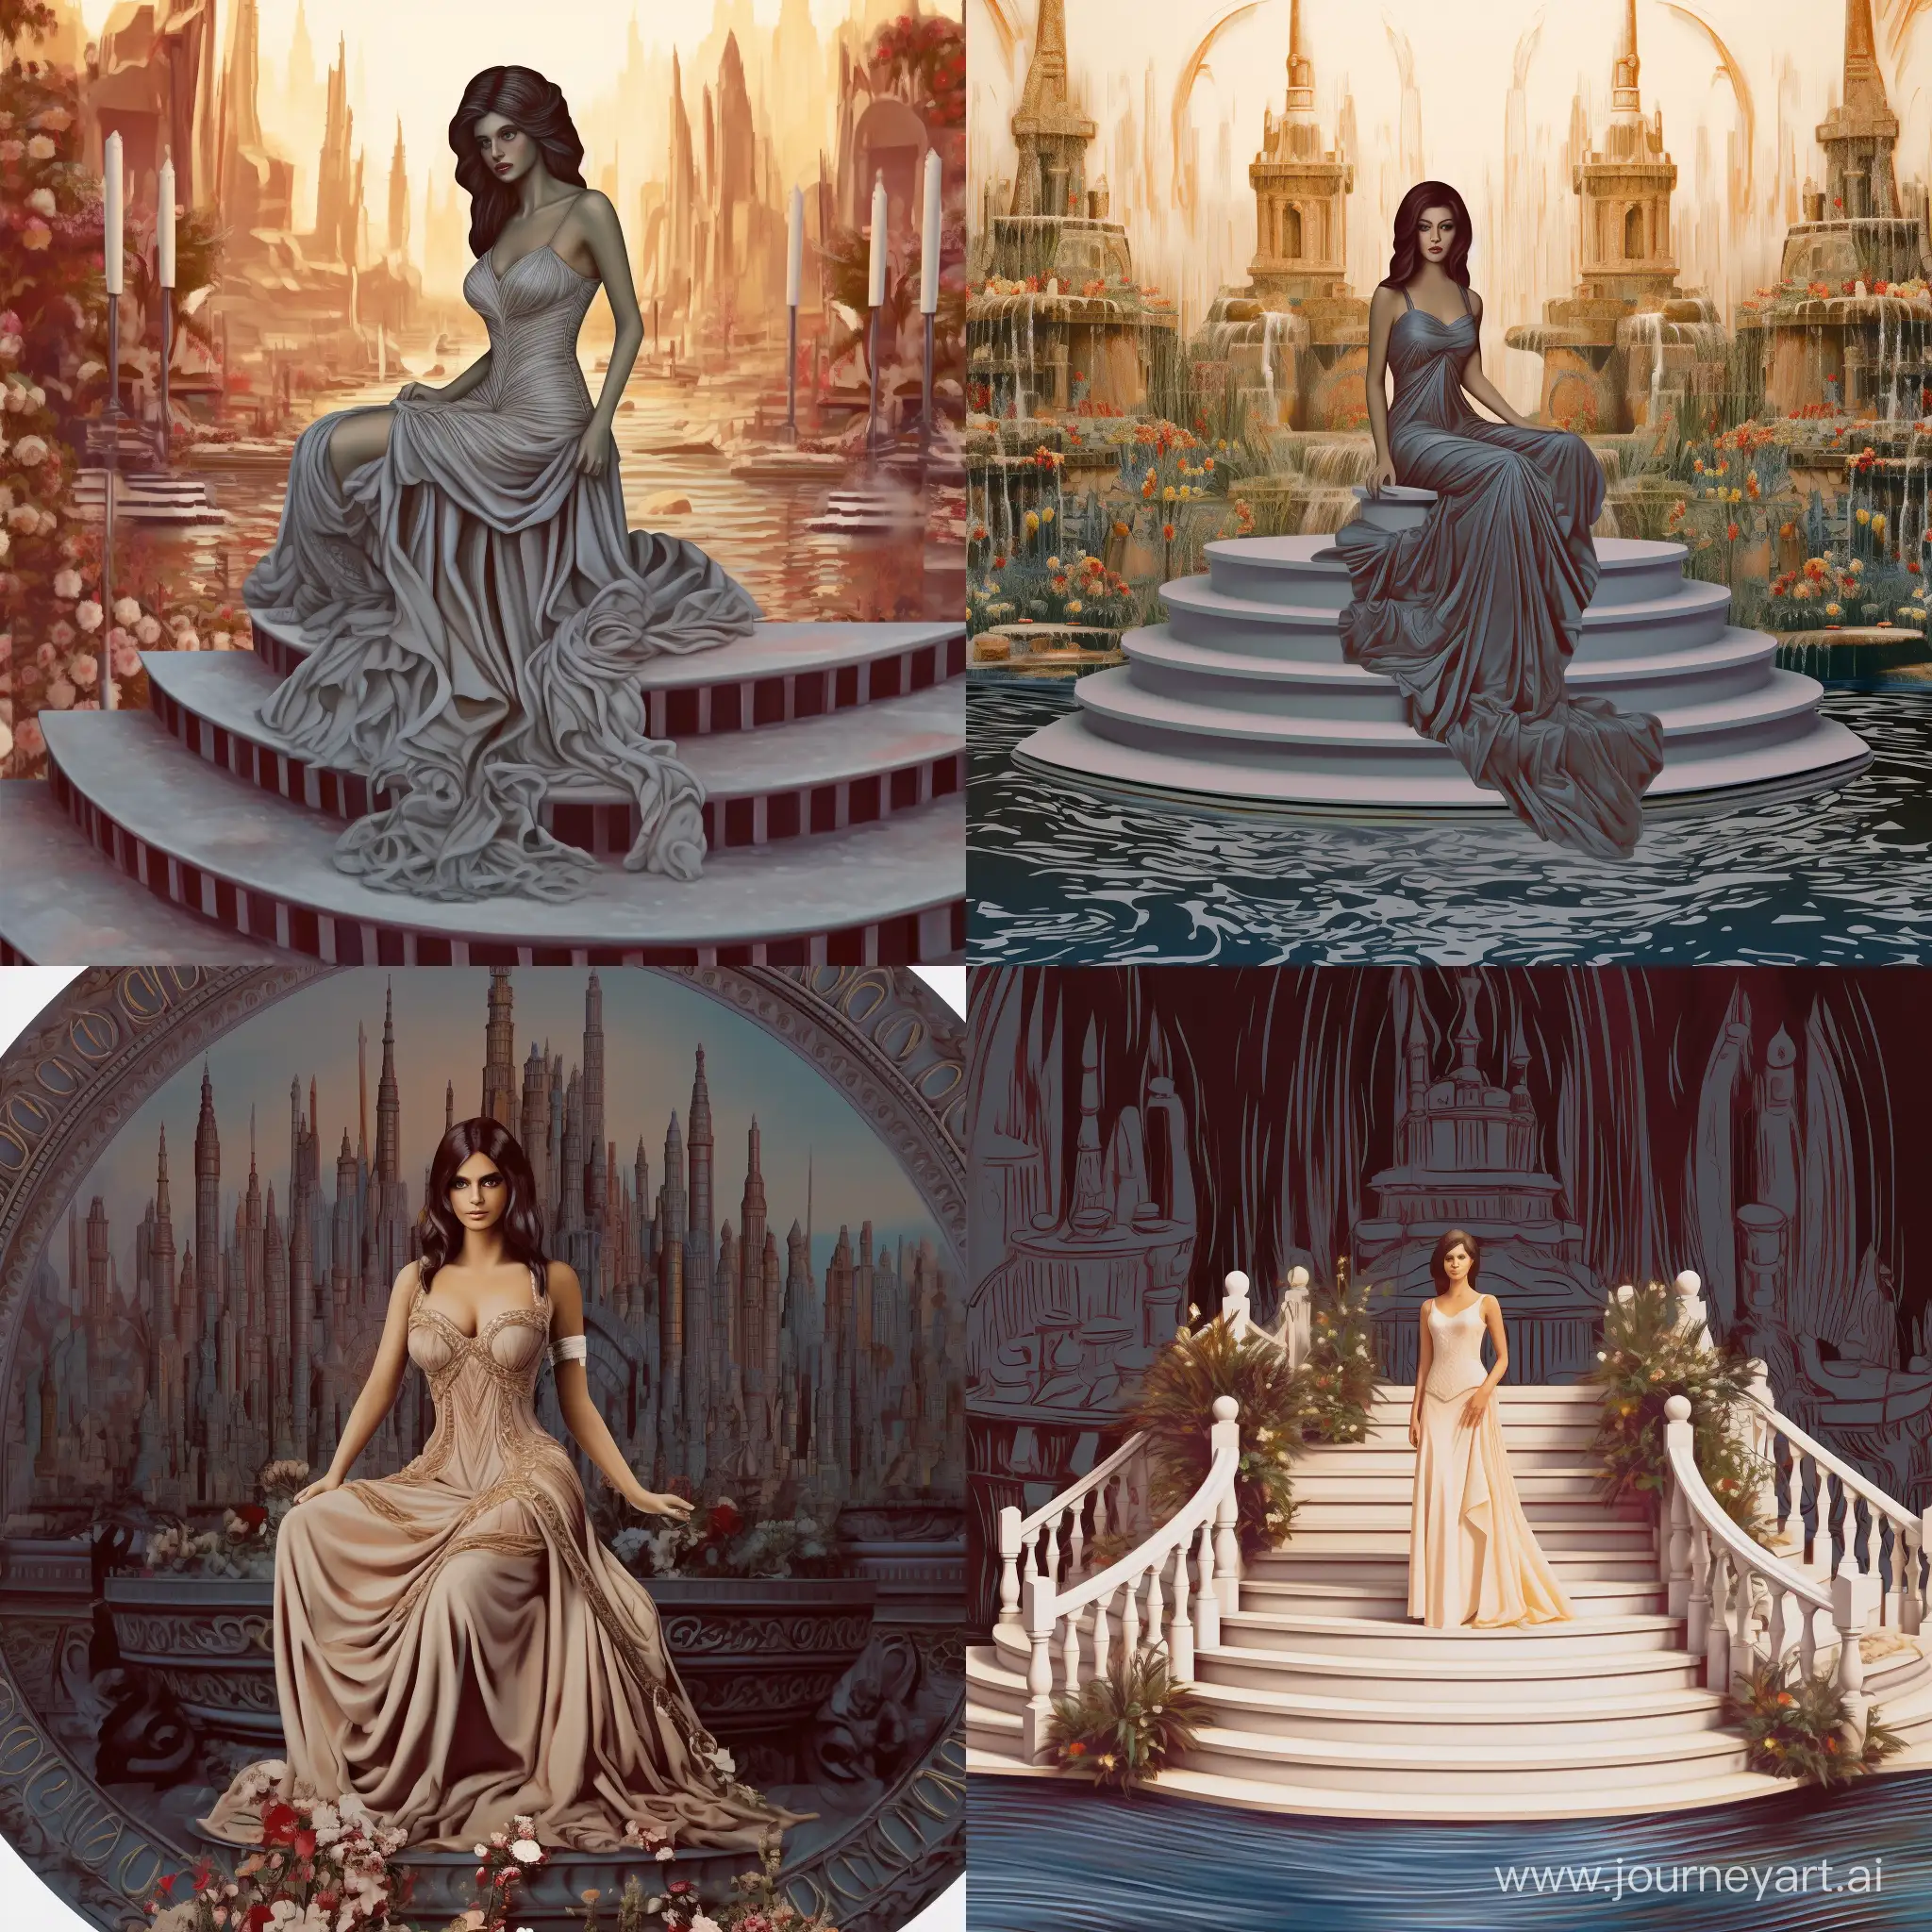 Fantasy-Portrait-Kylie-Jenner-as-Princess-Arianne-Martell-in-Exotic-Garden